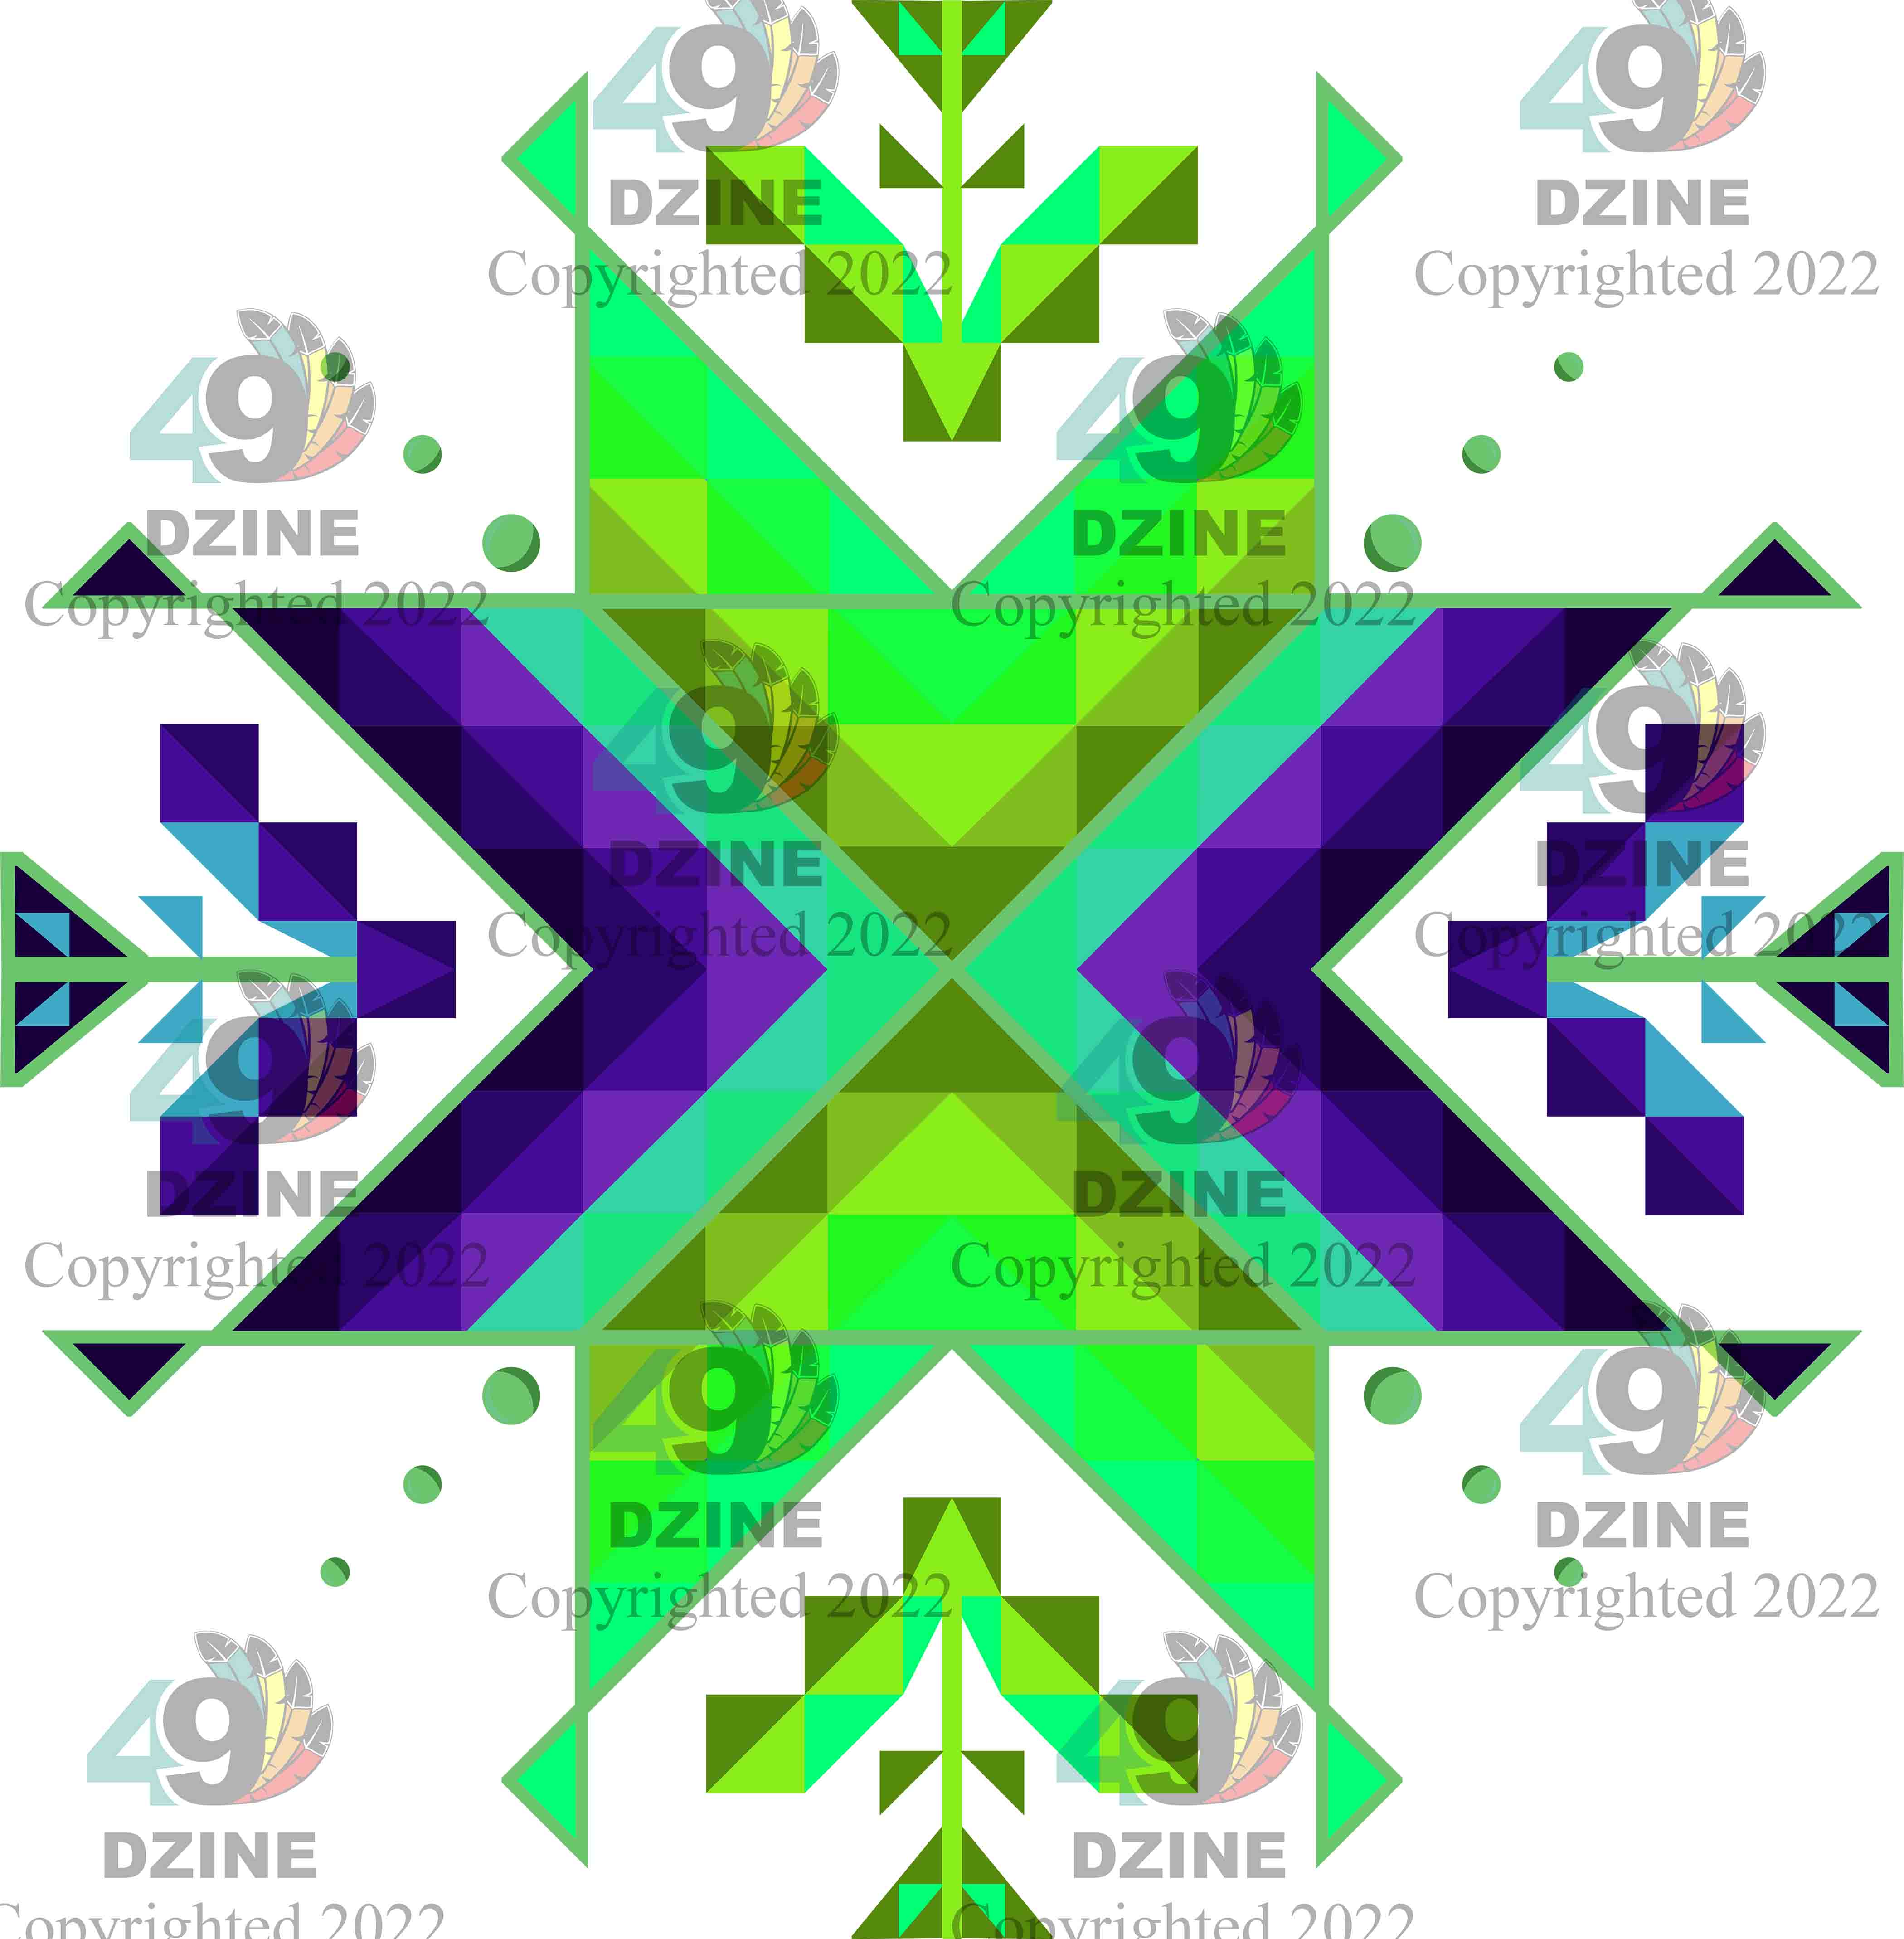 11-inch Geometric Transfer Dream of the Ancestors Transfers 49 Dzine Dream of the Ancestors Spring Green 